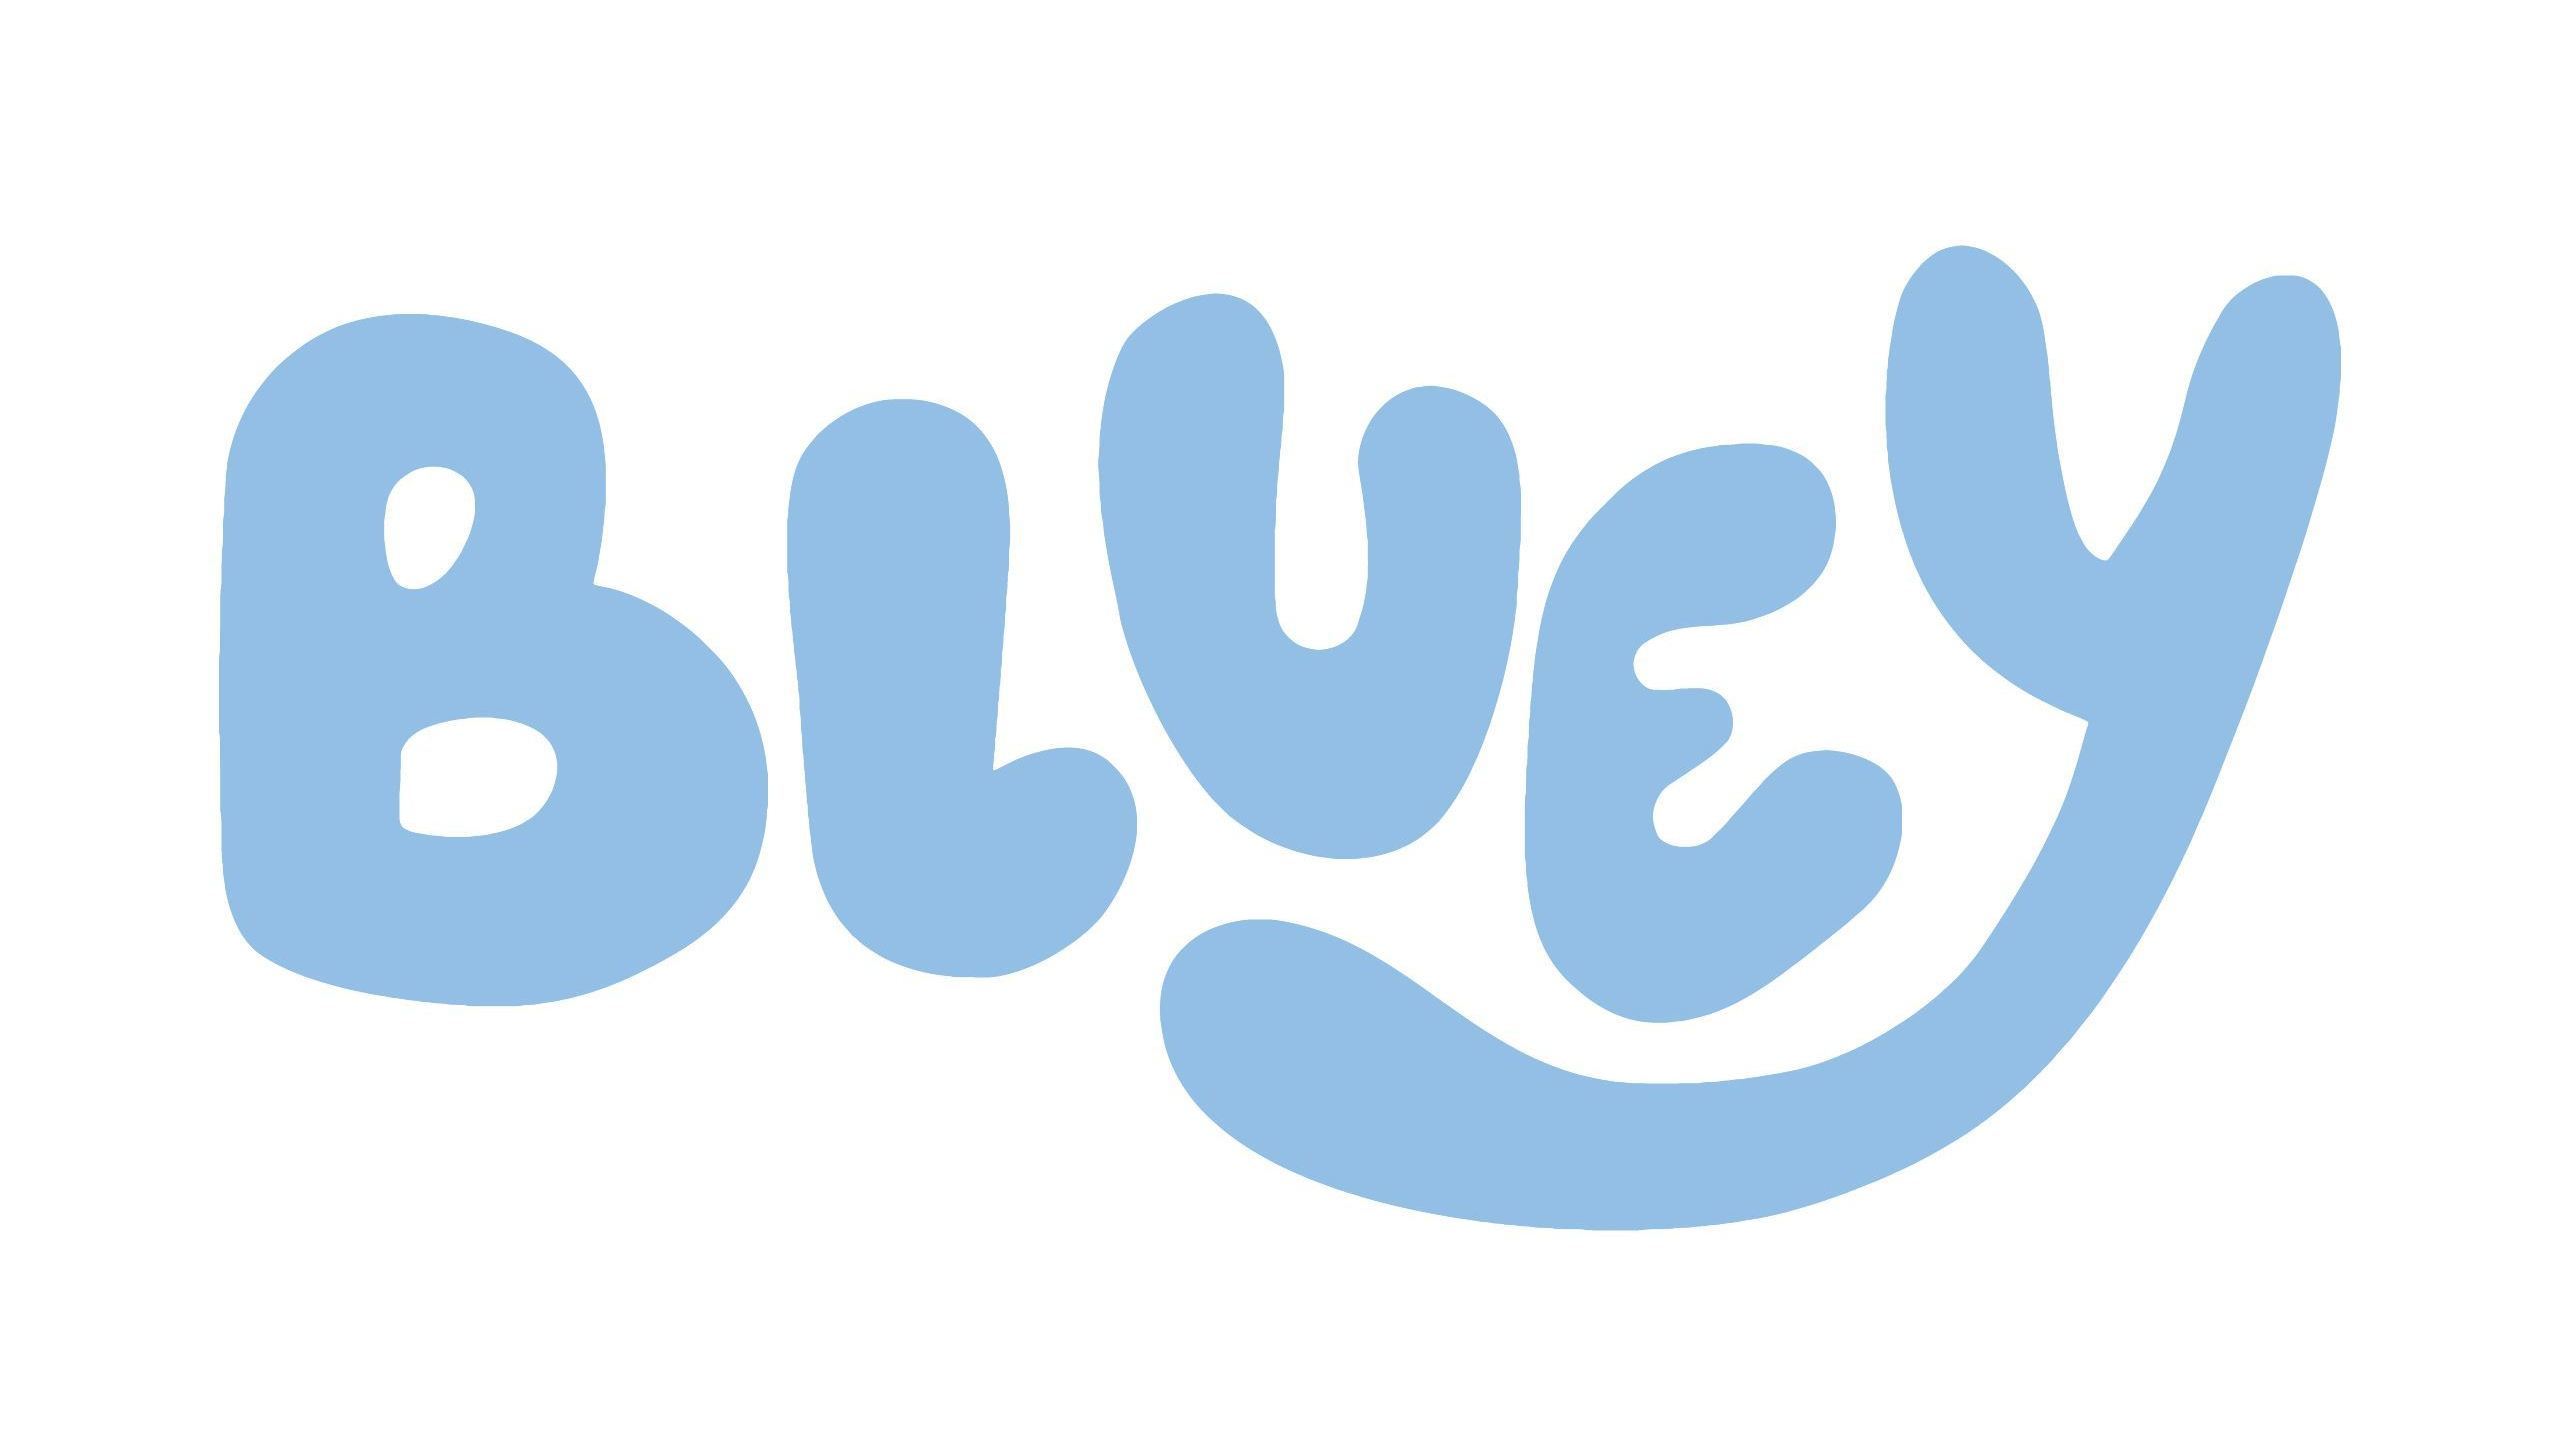 Bluey Season 3